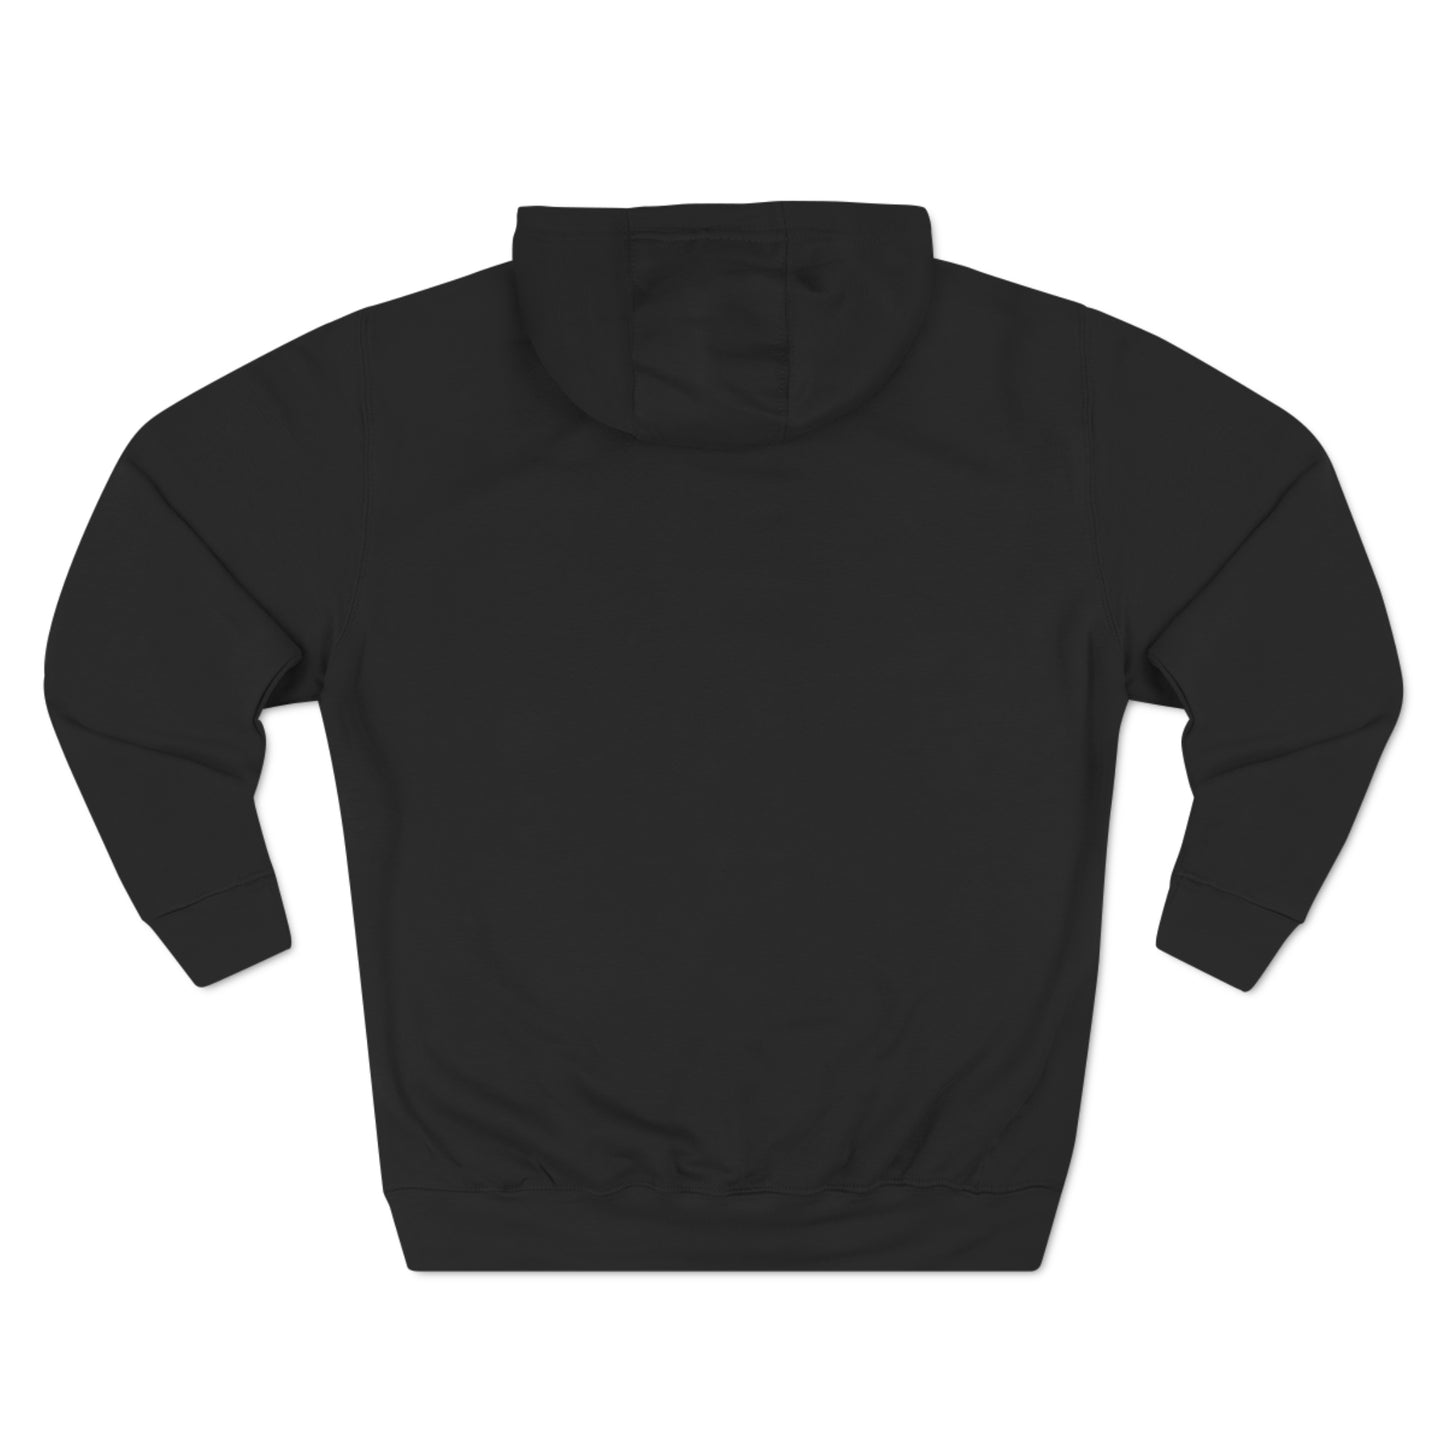 CLOUDMAN RISING | MOABI Premium Pullover Hoodie - Front Design Only